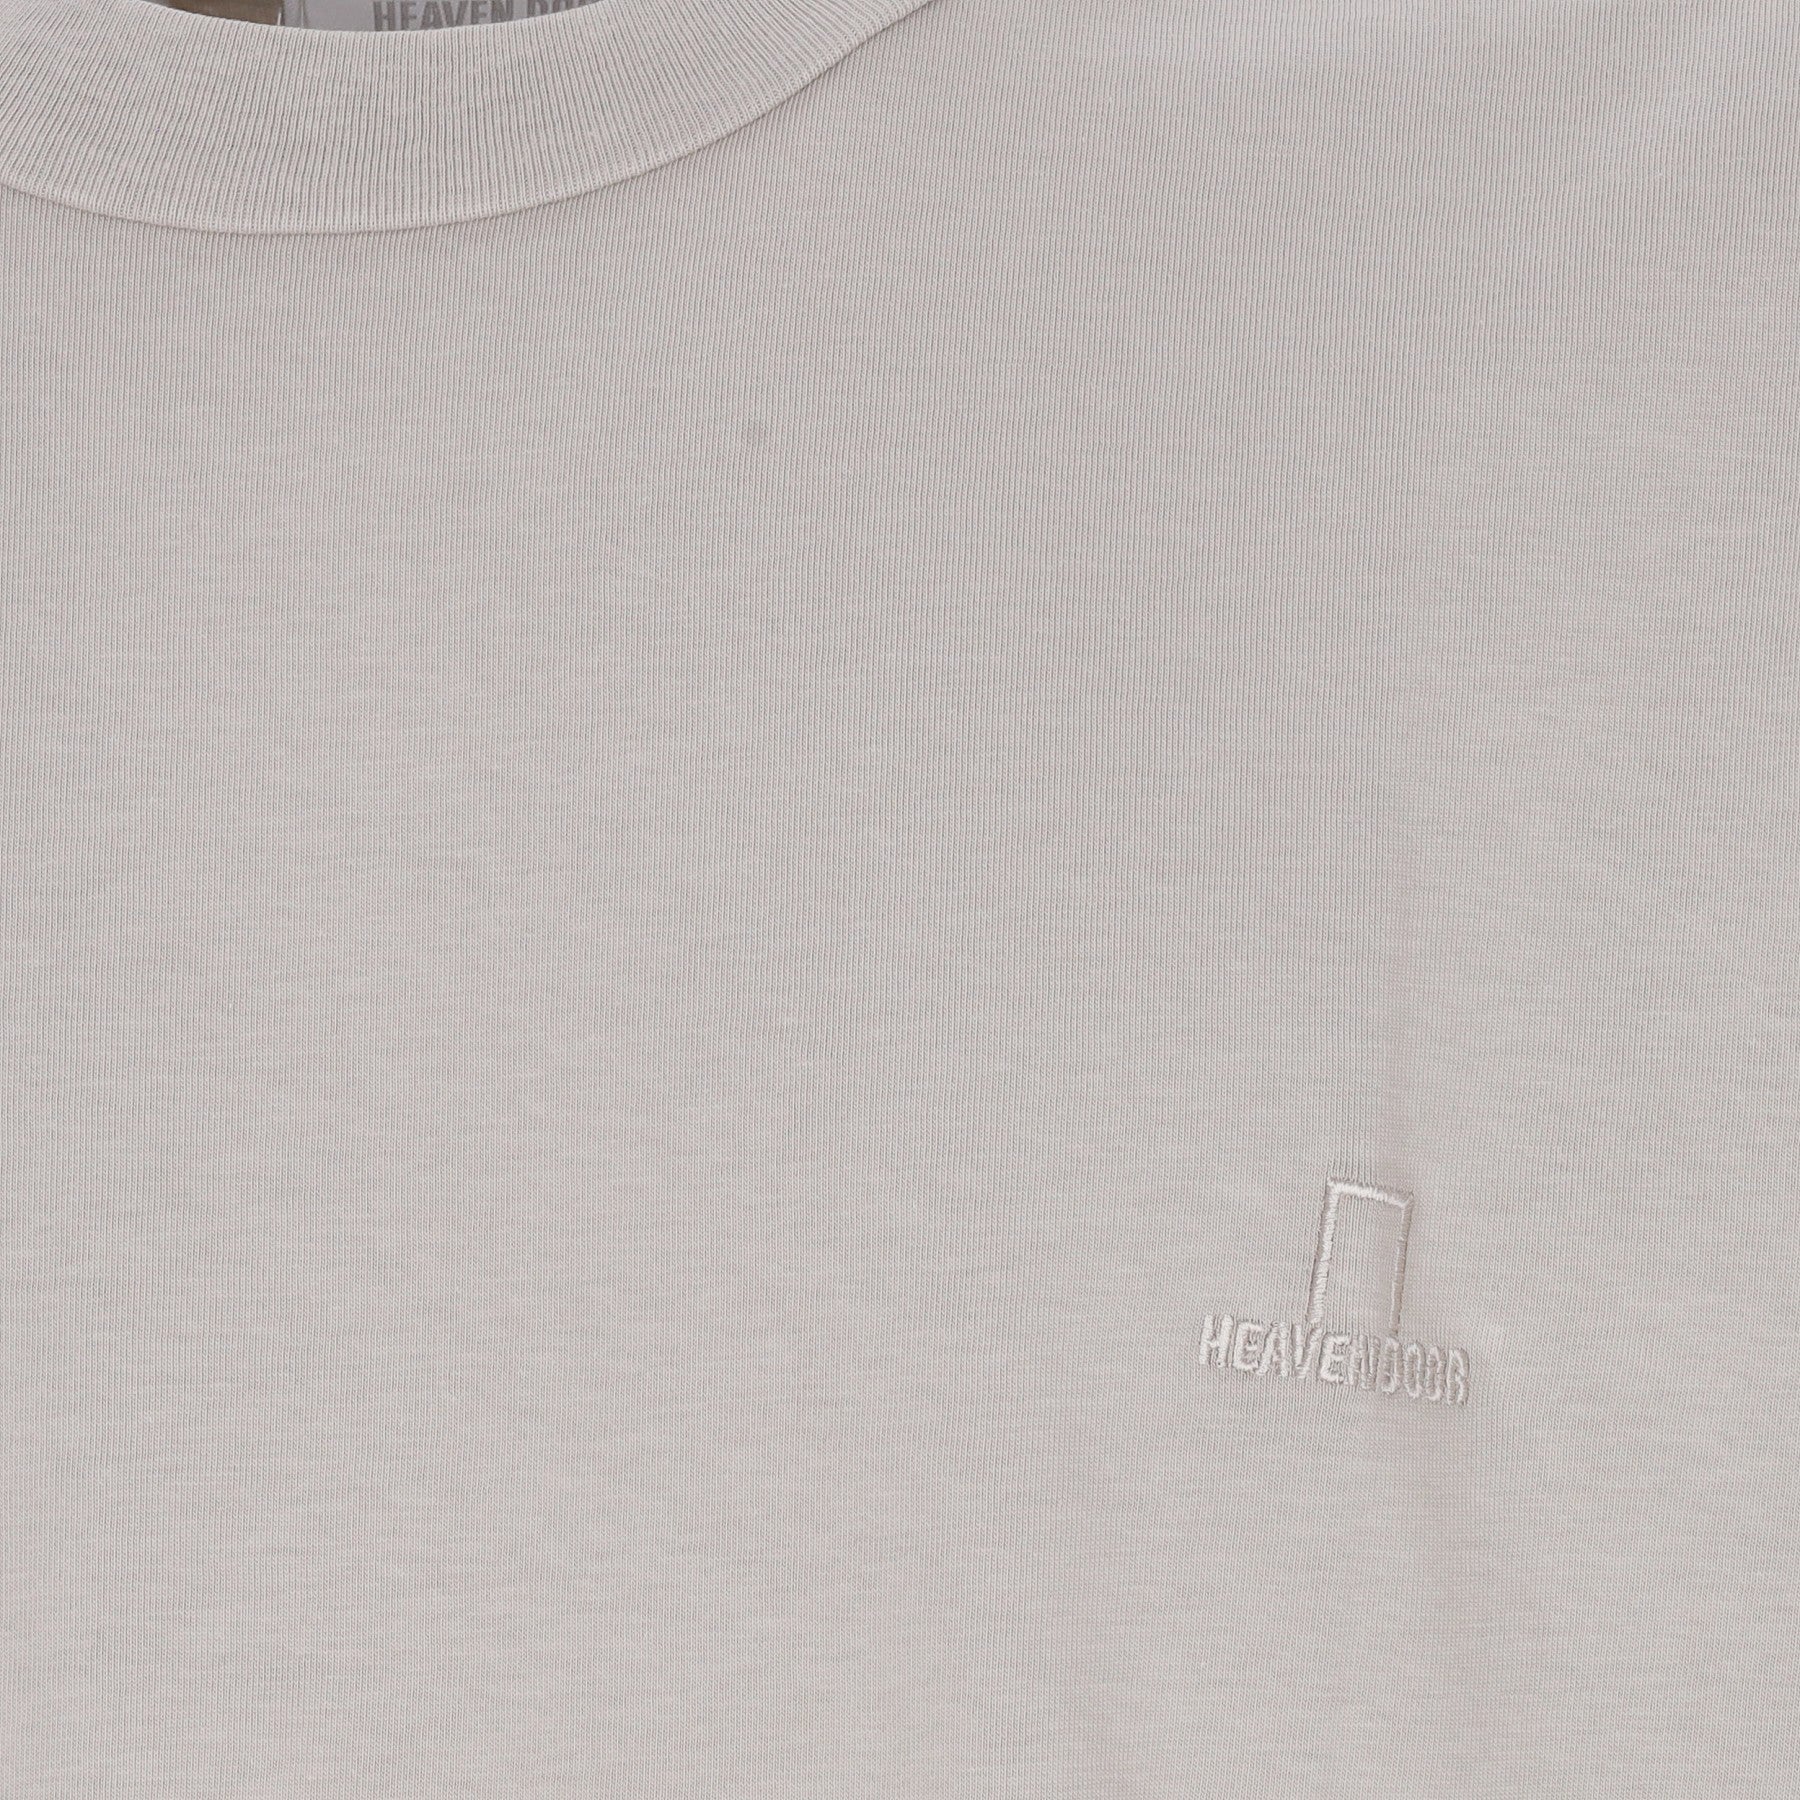 Men's Embroidered Logo Tee Fog T-Shirt